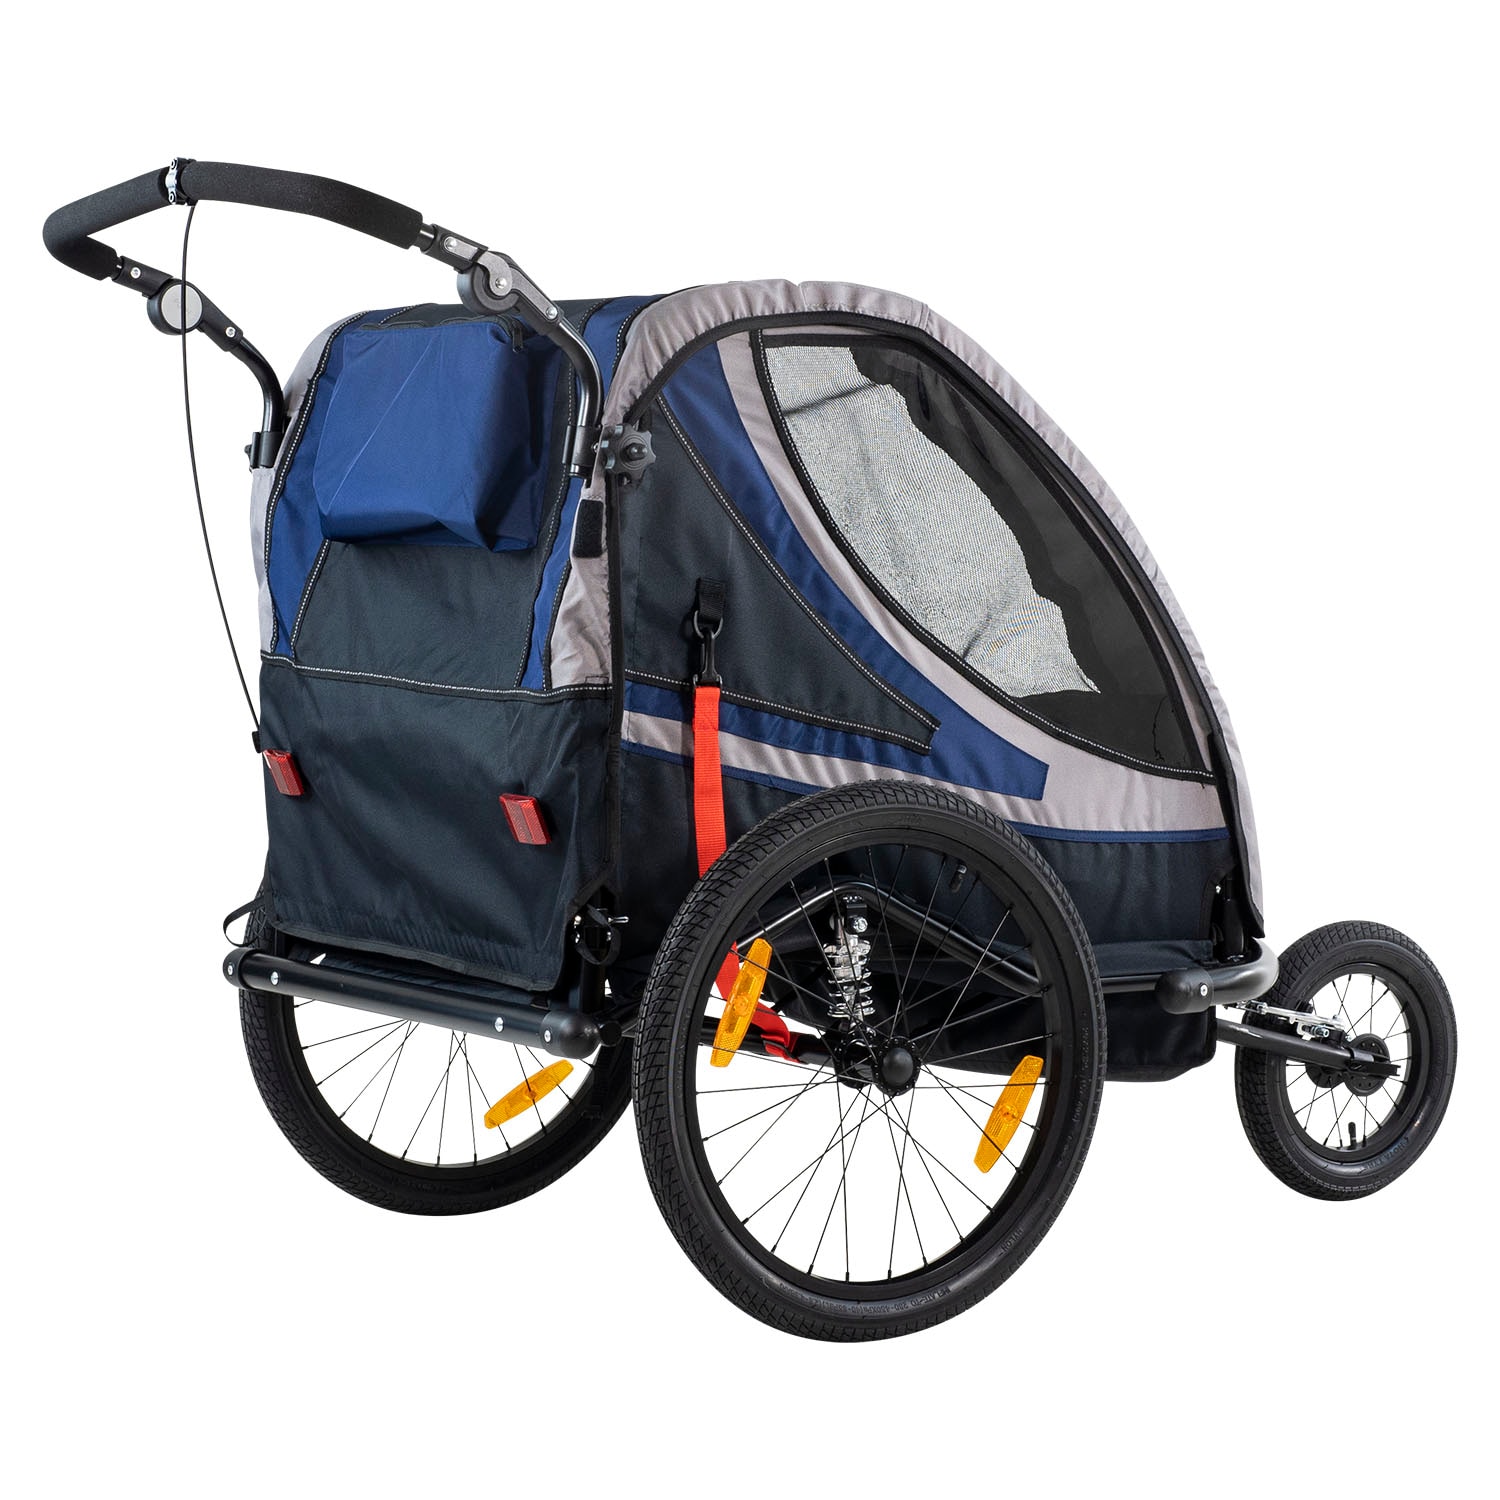 Cykelvagn SunBee Supreme XL, med strollerkit